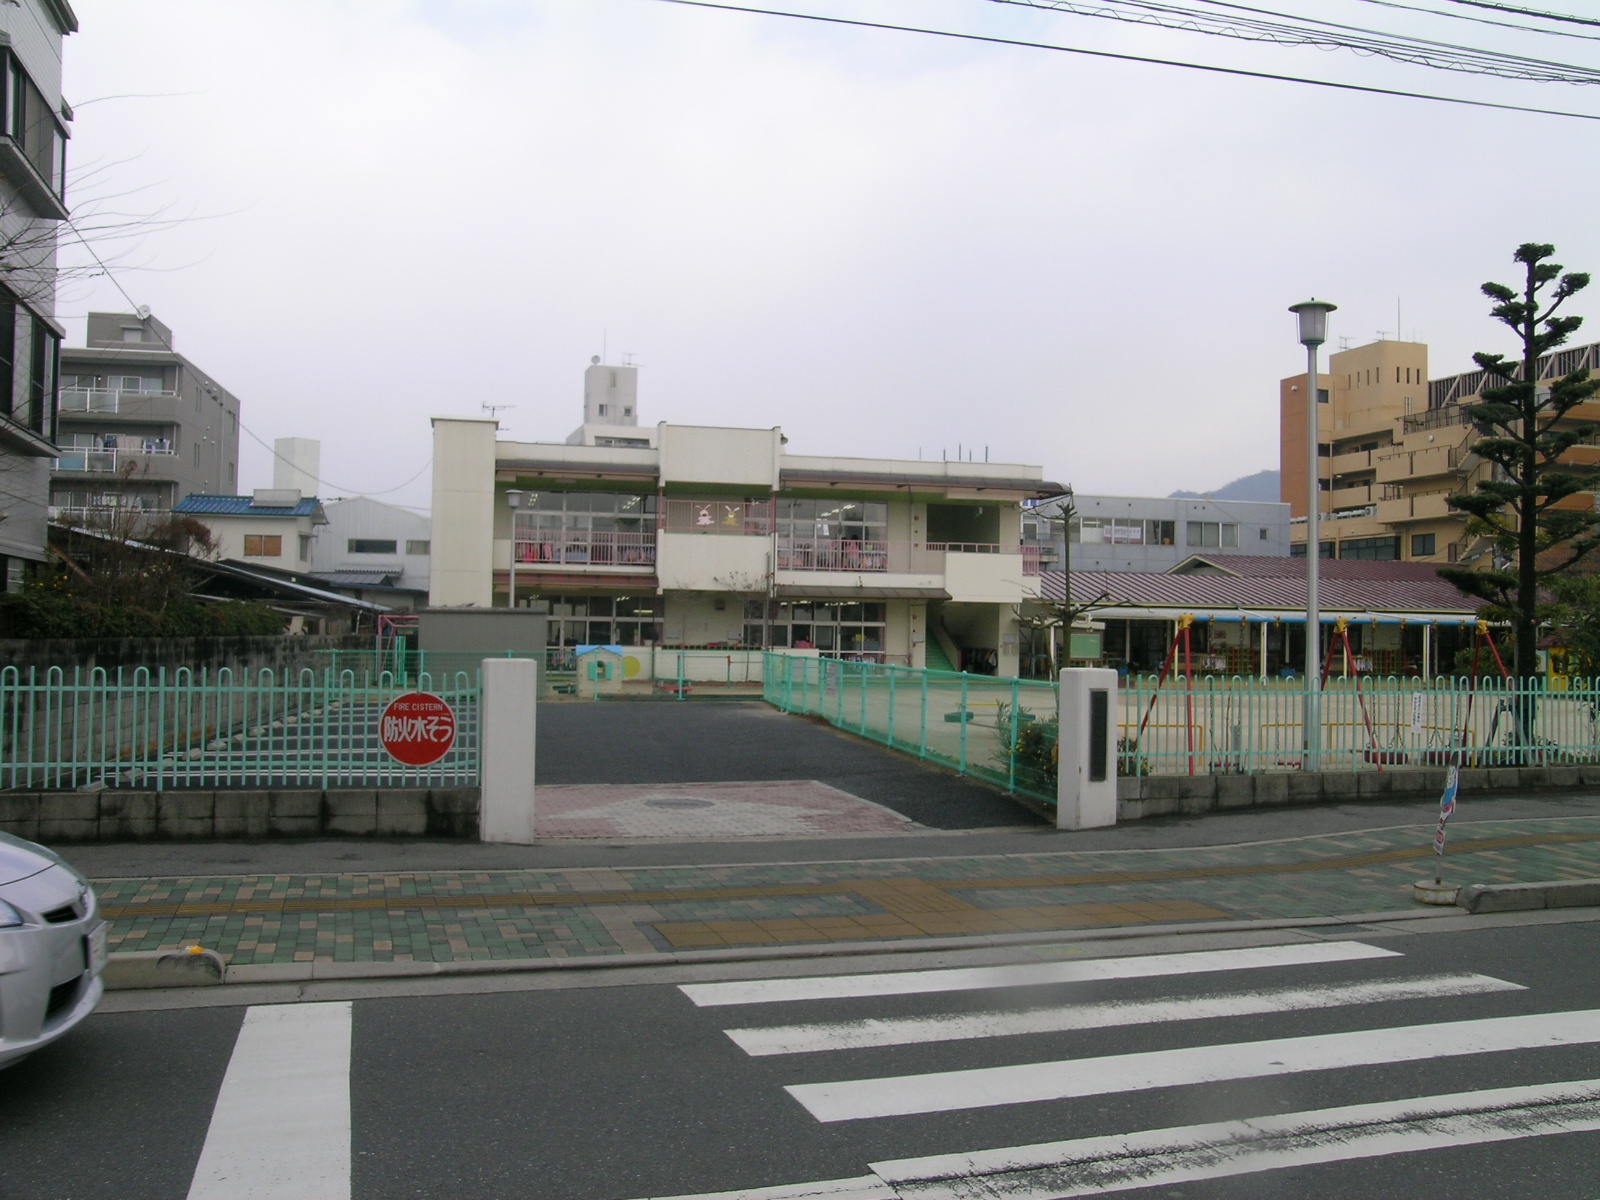 kindergarten ・ Nursery. Suzuho Gardens nursery school (kindergarten ・ 261m to the nursery)